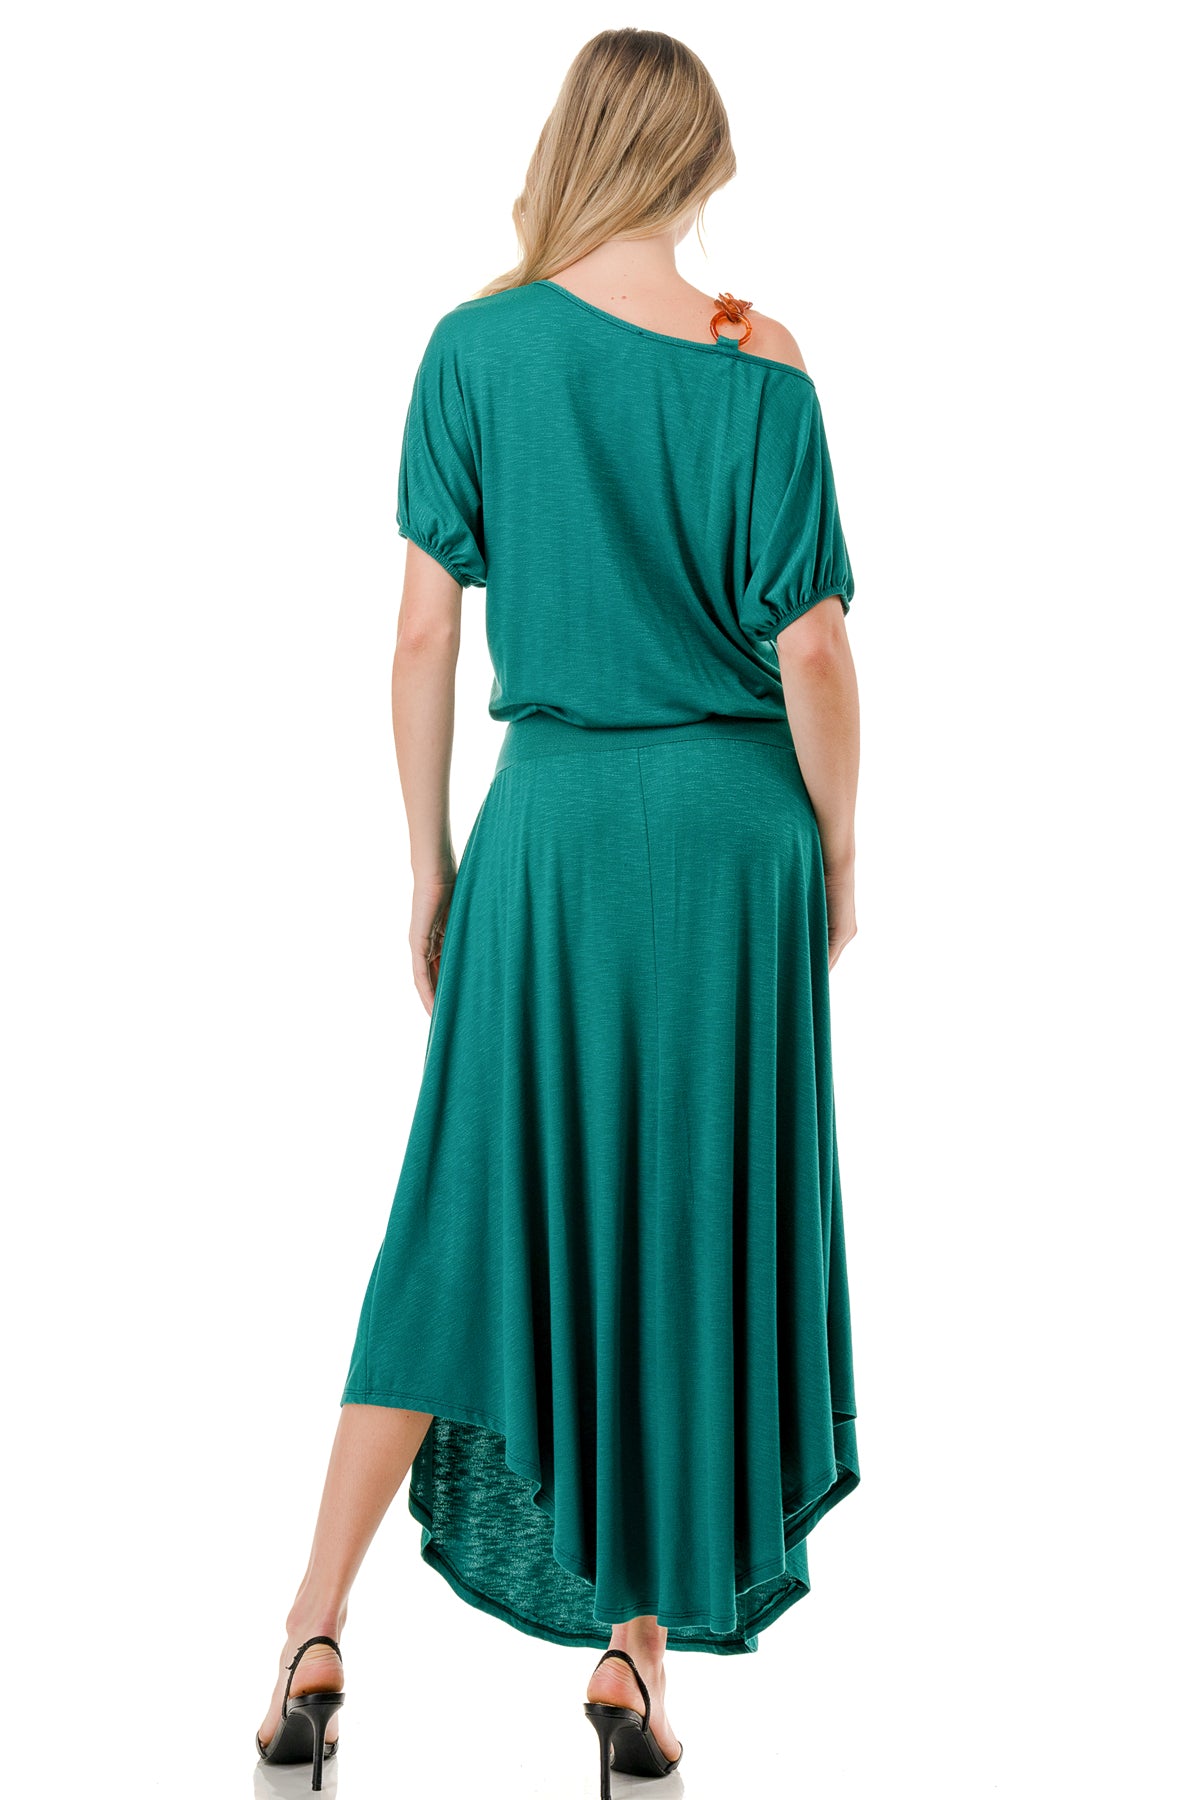 LOUISA ONE SHOULDER DRESS (KELLY GREEN)- VD3295